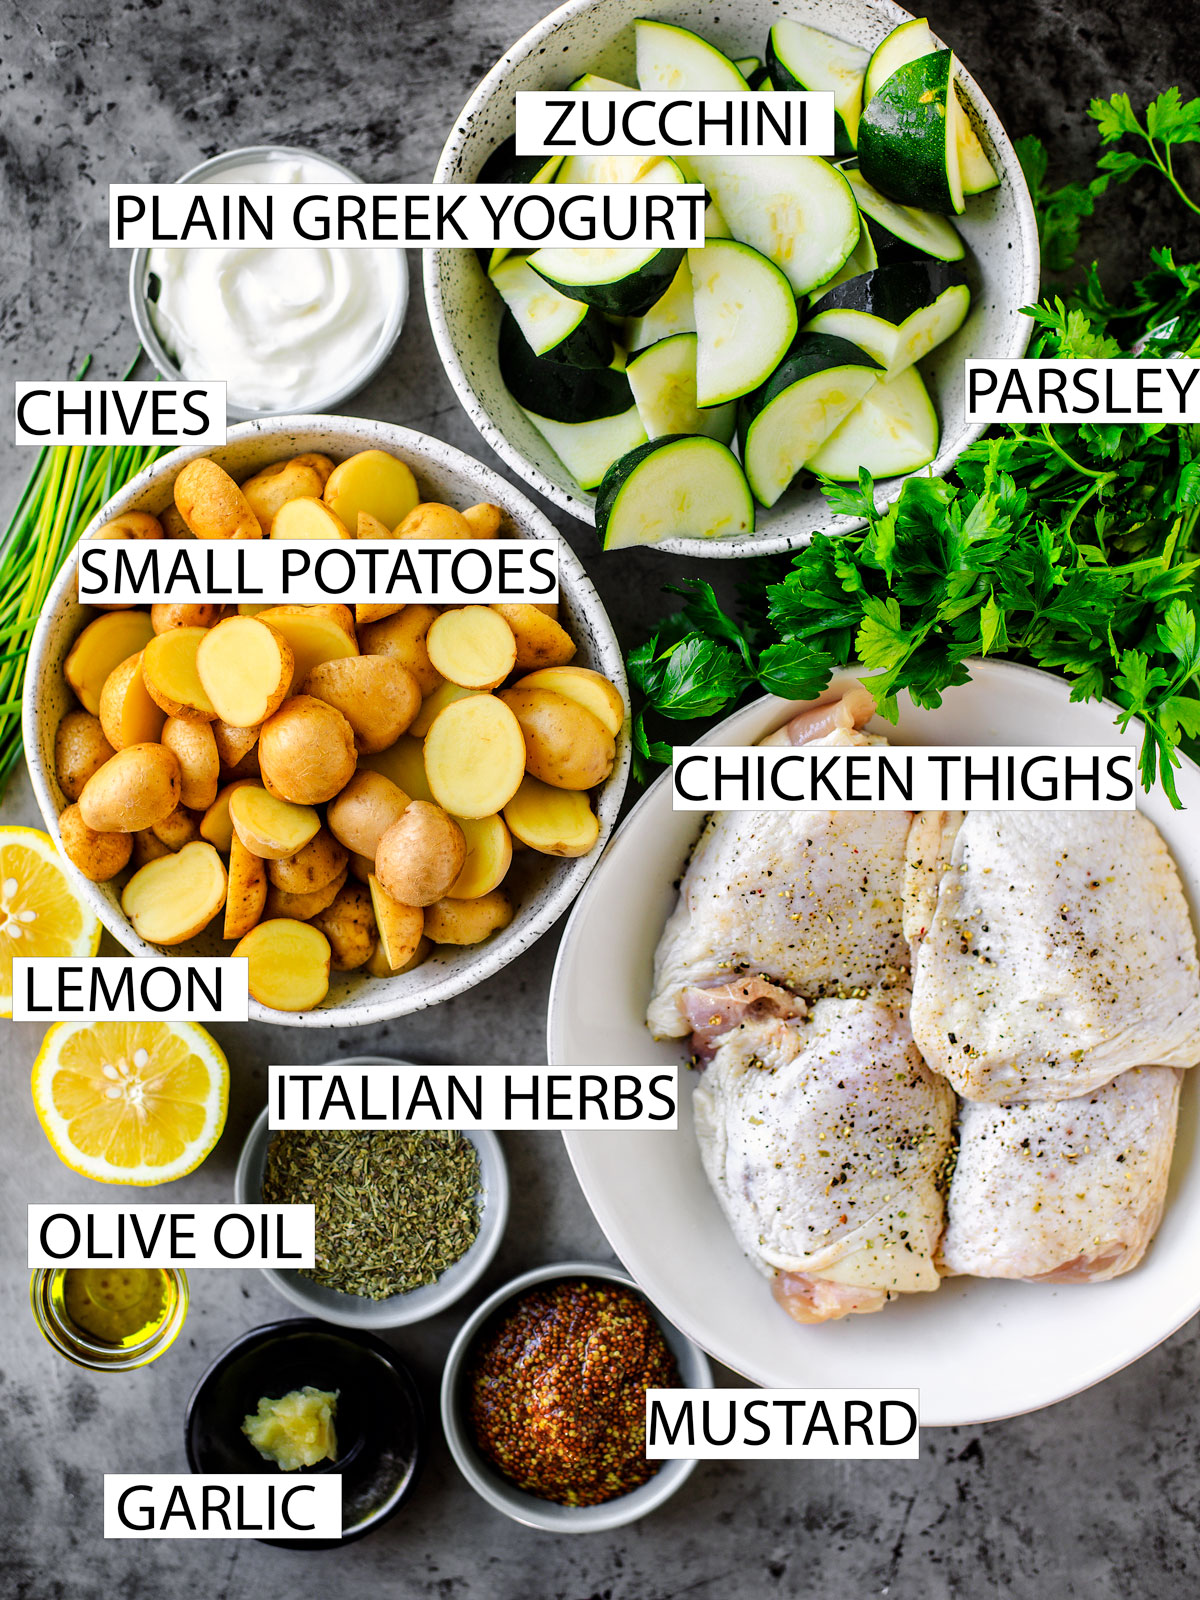 Spread of ingredients: chicken thighs, potatoes, herbs, mustard, oil, and yogurt.